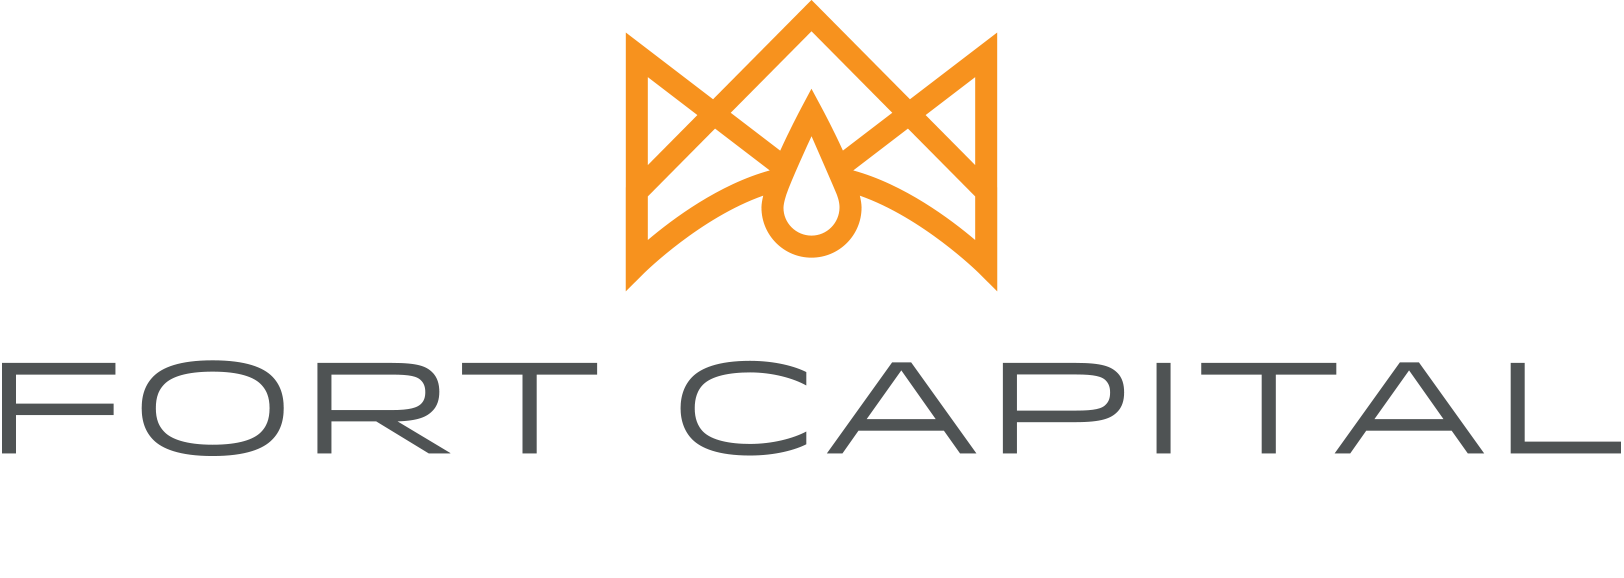 Fort Capital Logo.png